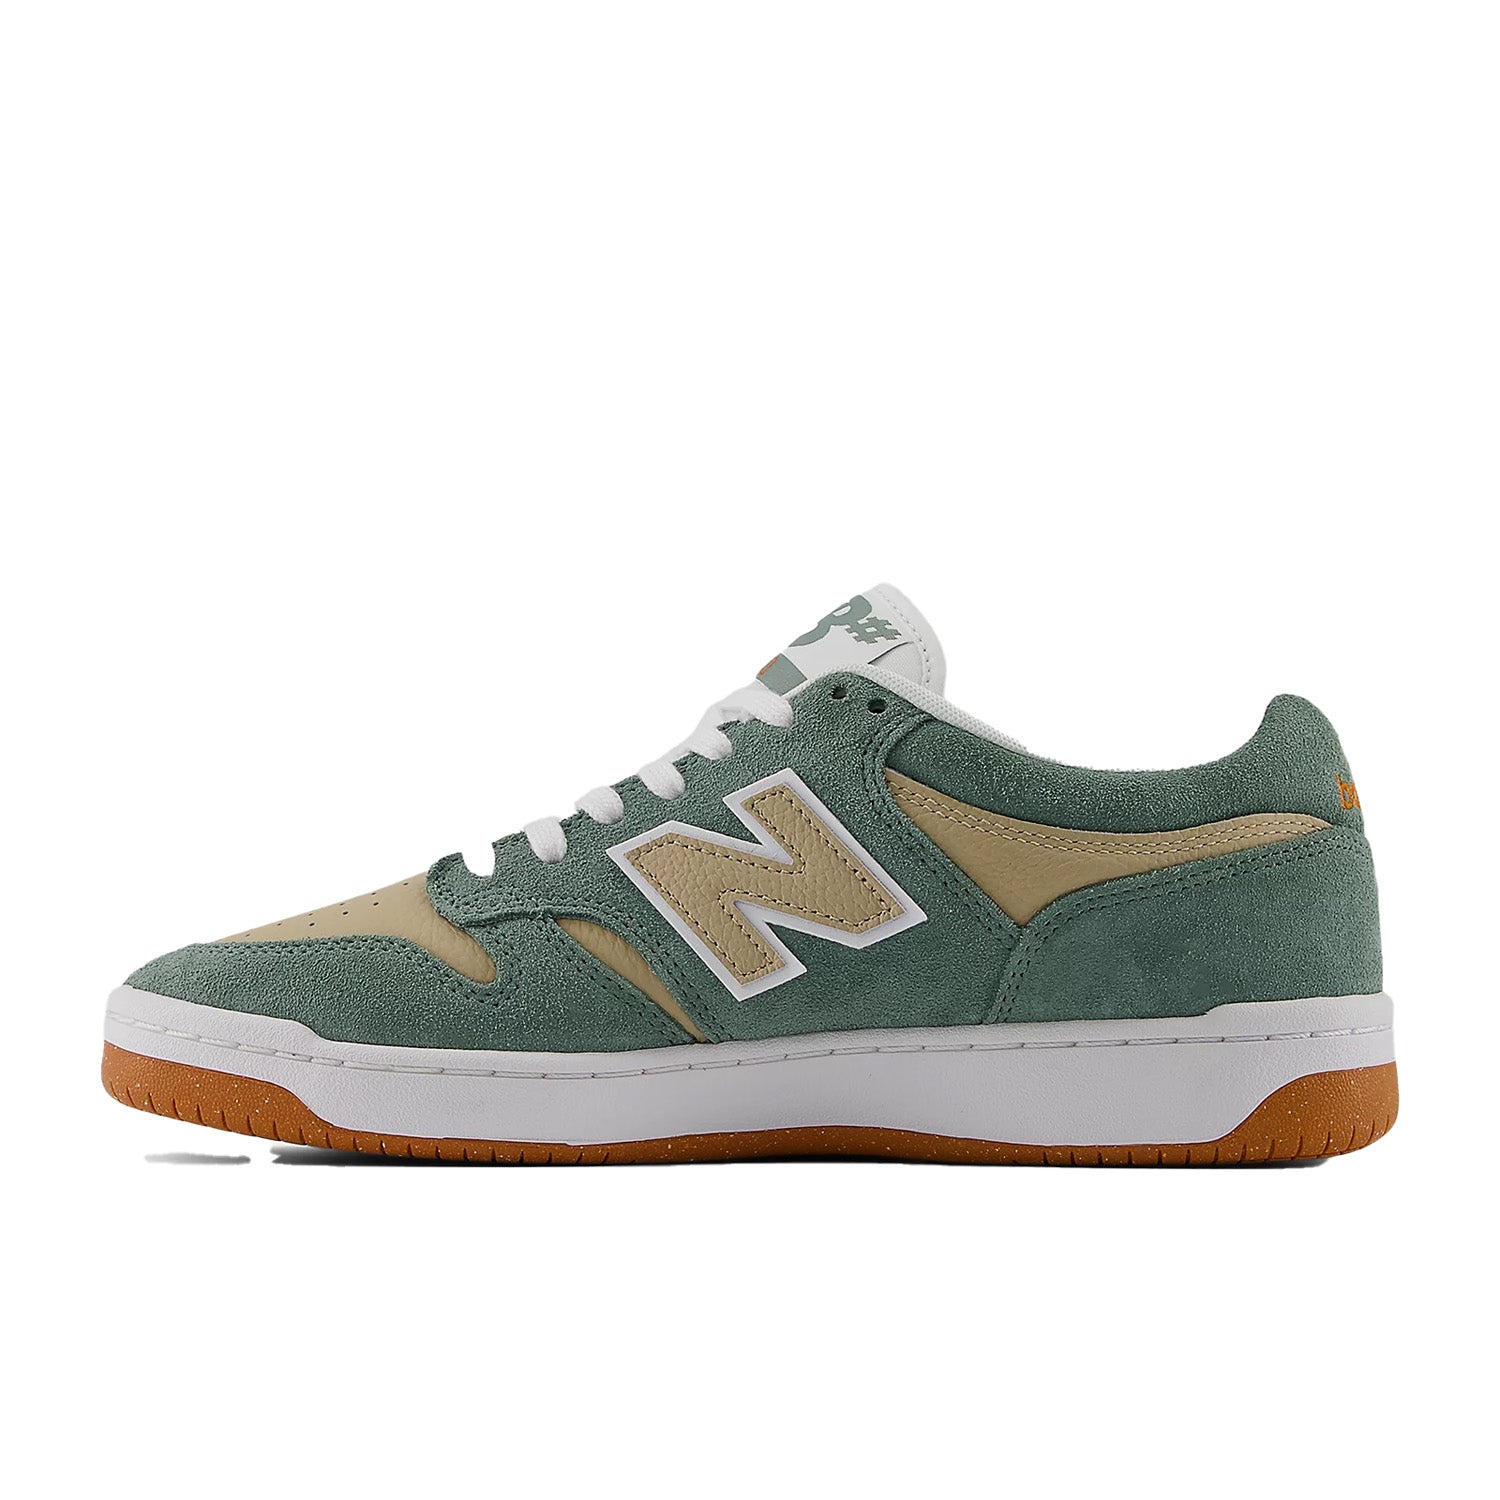 New Balance Numeric NM480NWB Orchard Skateshop - Juniper/White